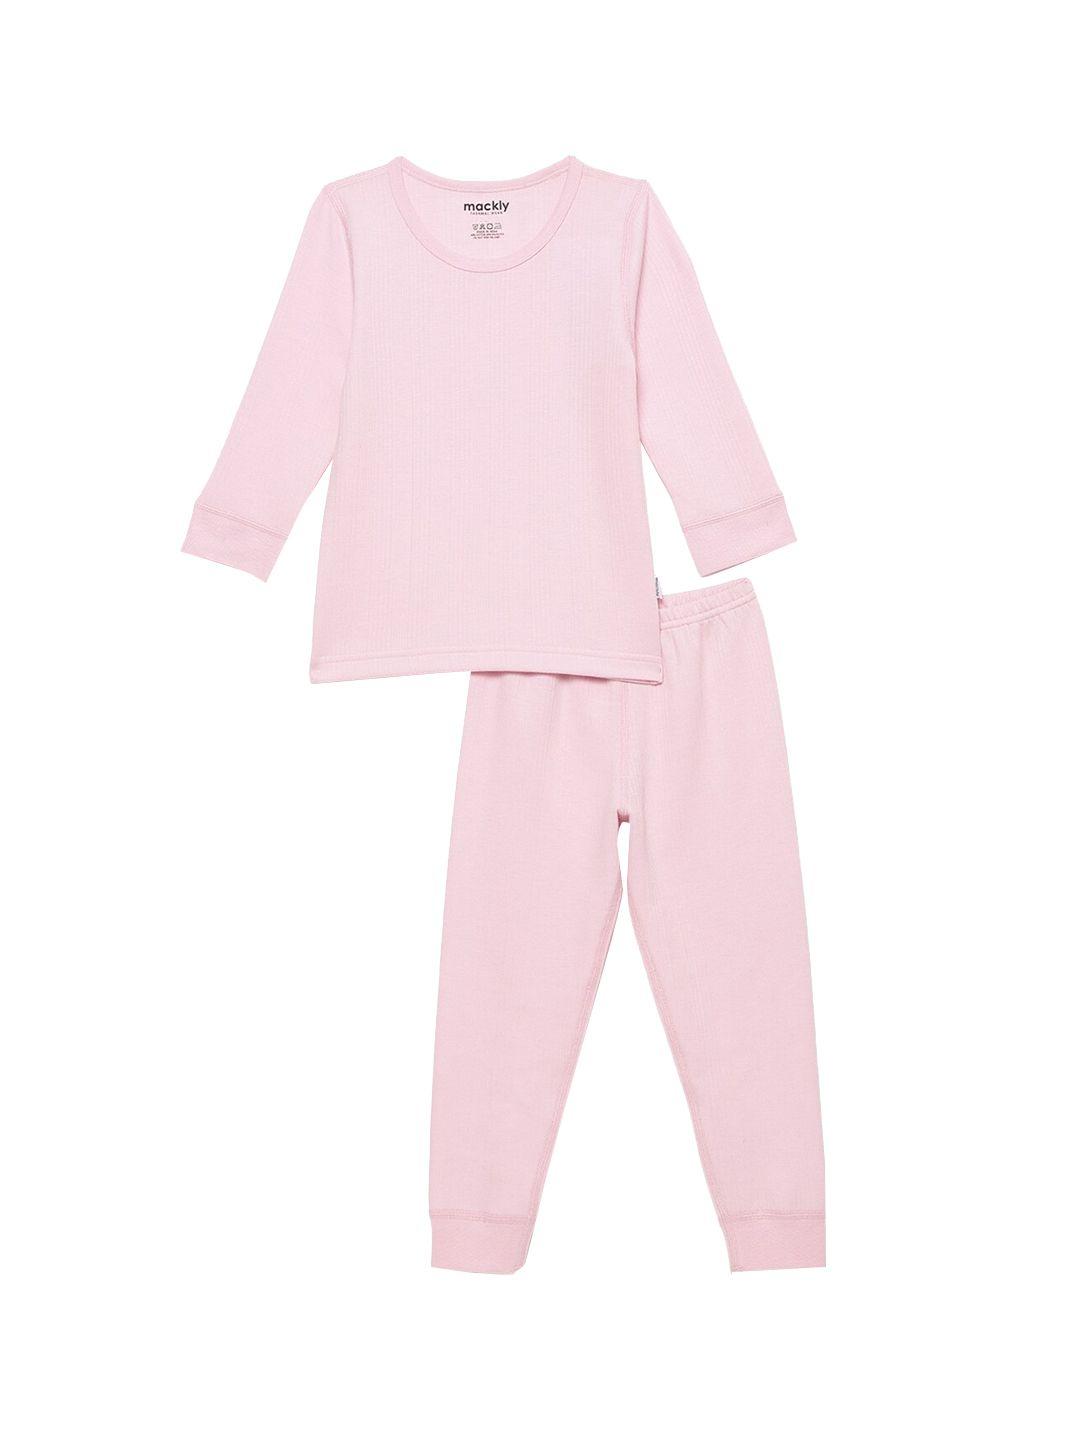 mackly infant kids pink solid thermal set